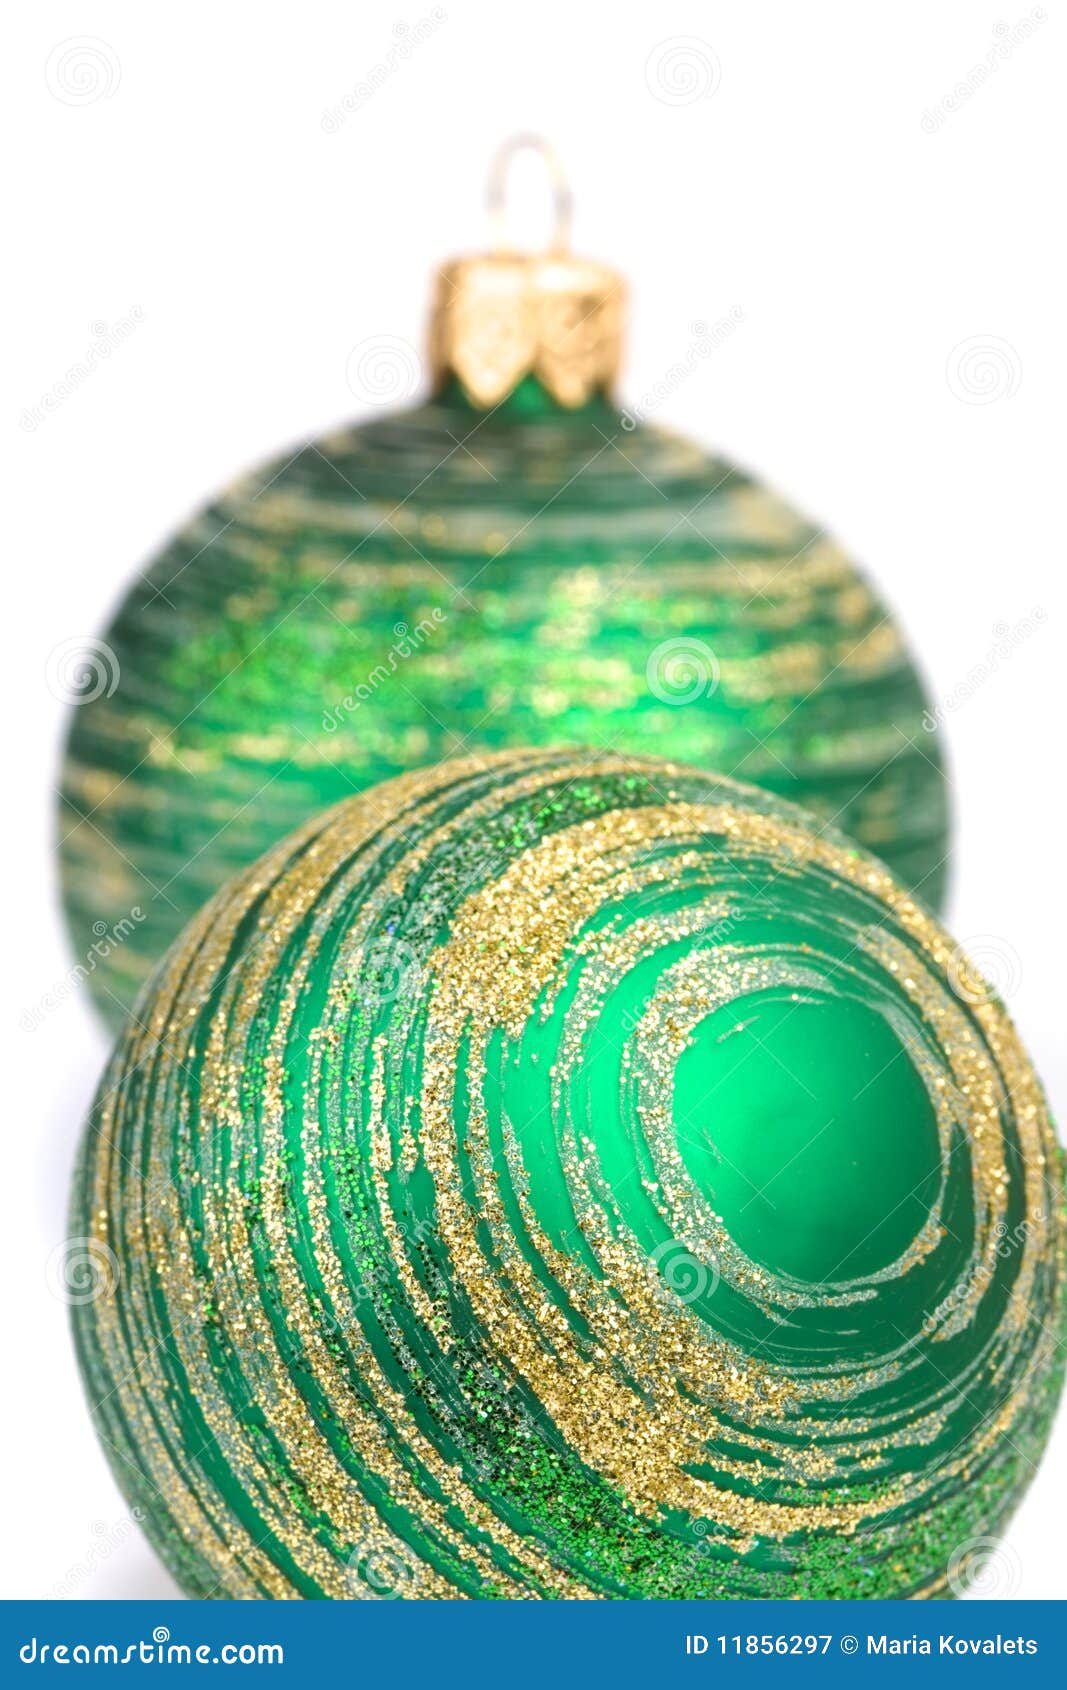 Two green christmas balls stock image. Image of white - 11856297